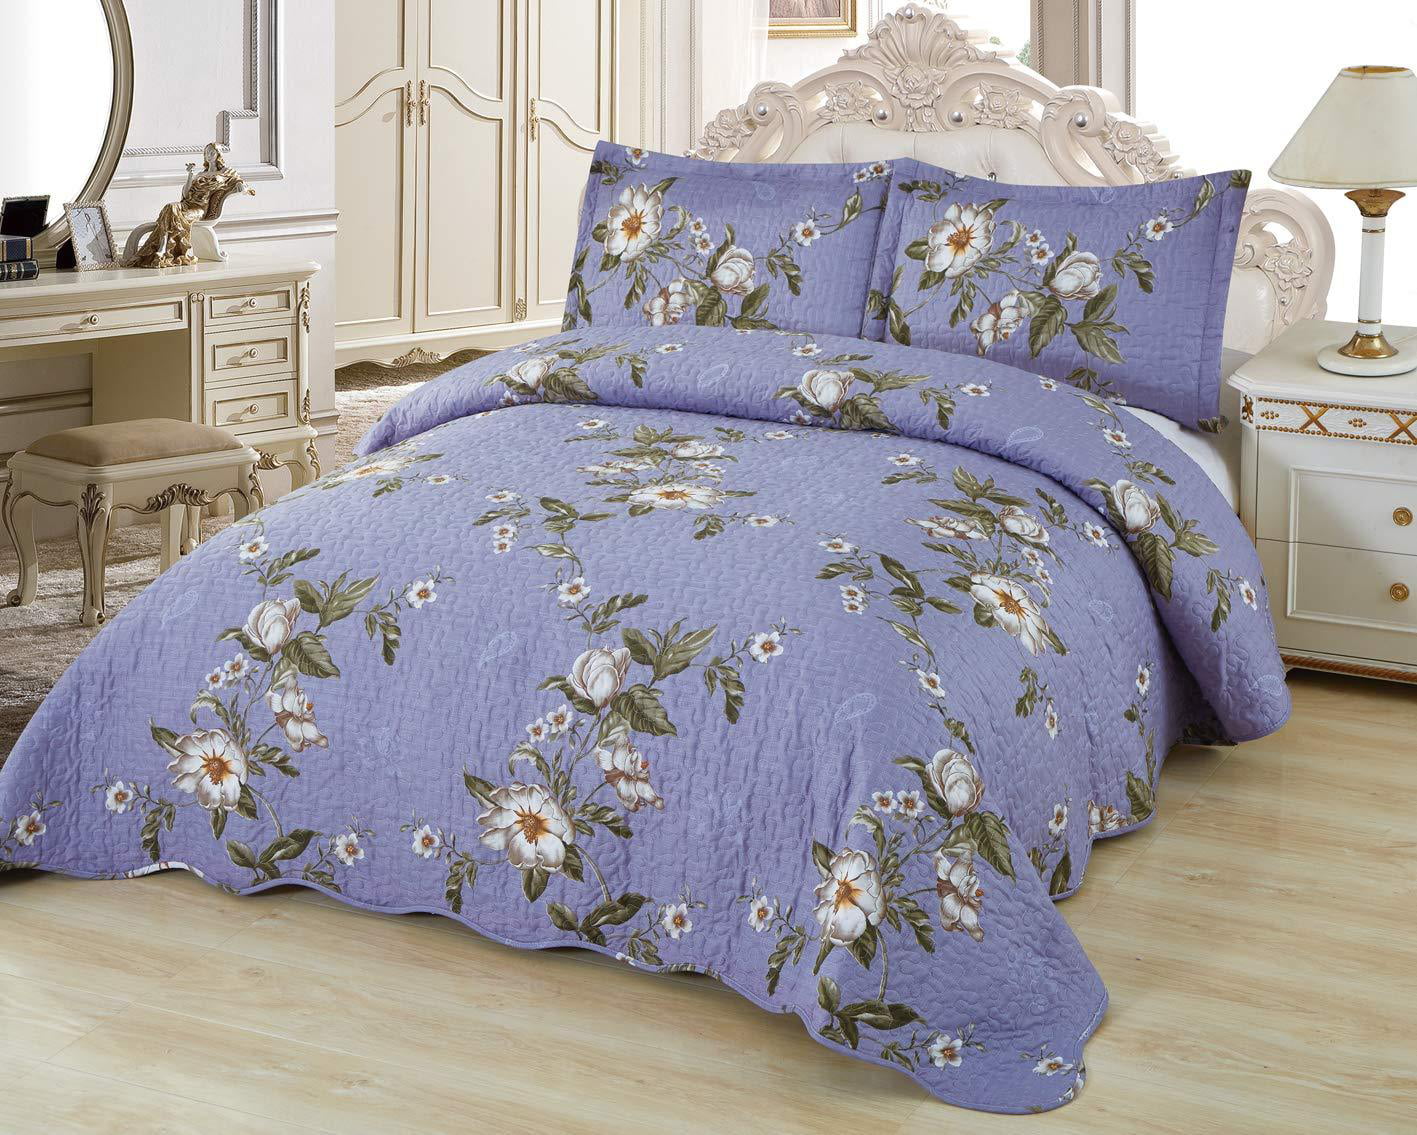 3 Piece King Size Quilt Bedspread Coverlet Bedding Set